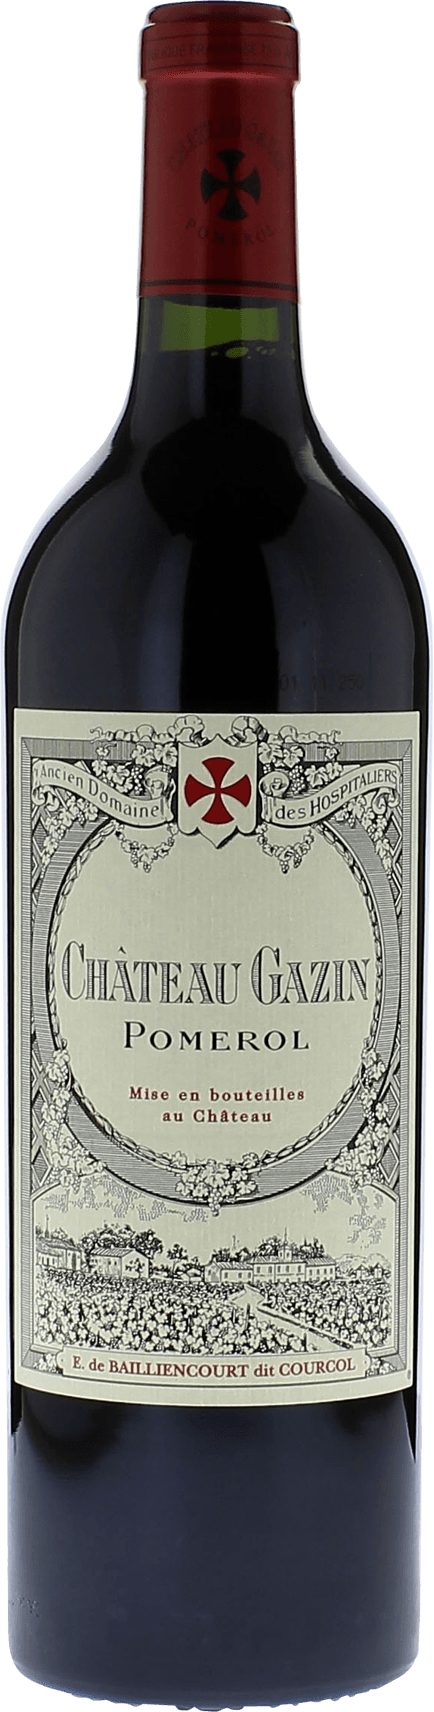 Gazin 1999  Pomerol, Bordeaux rouge